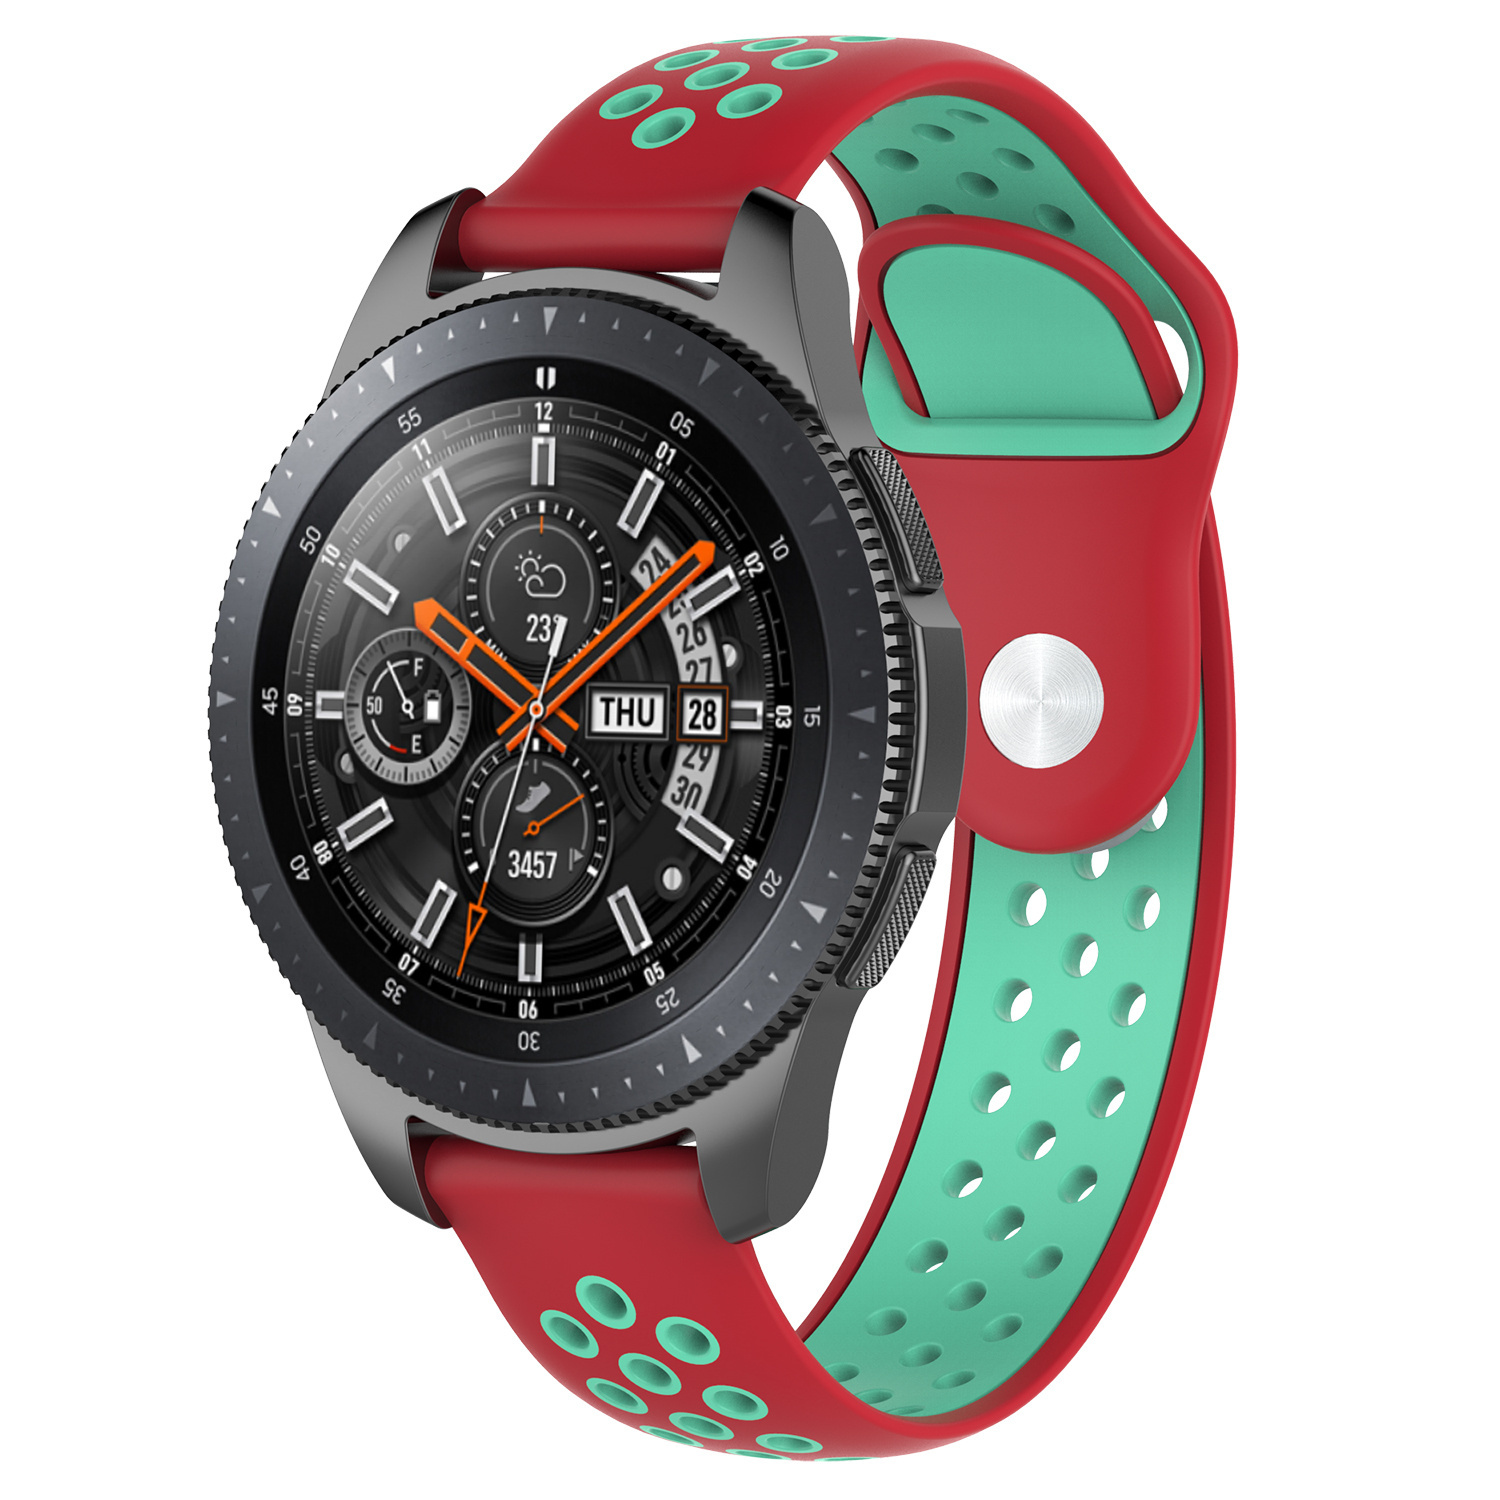 Samsung Galaxy Watch dupla sport szíj - piros teal